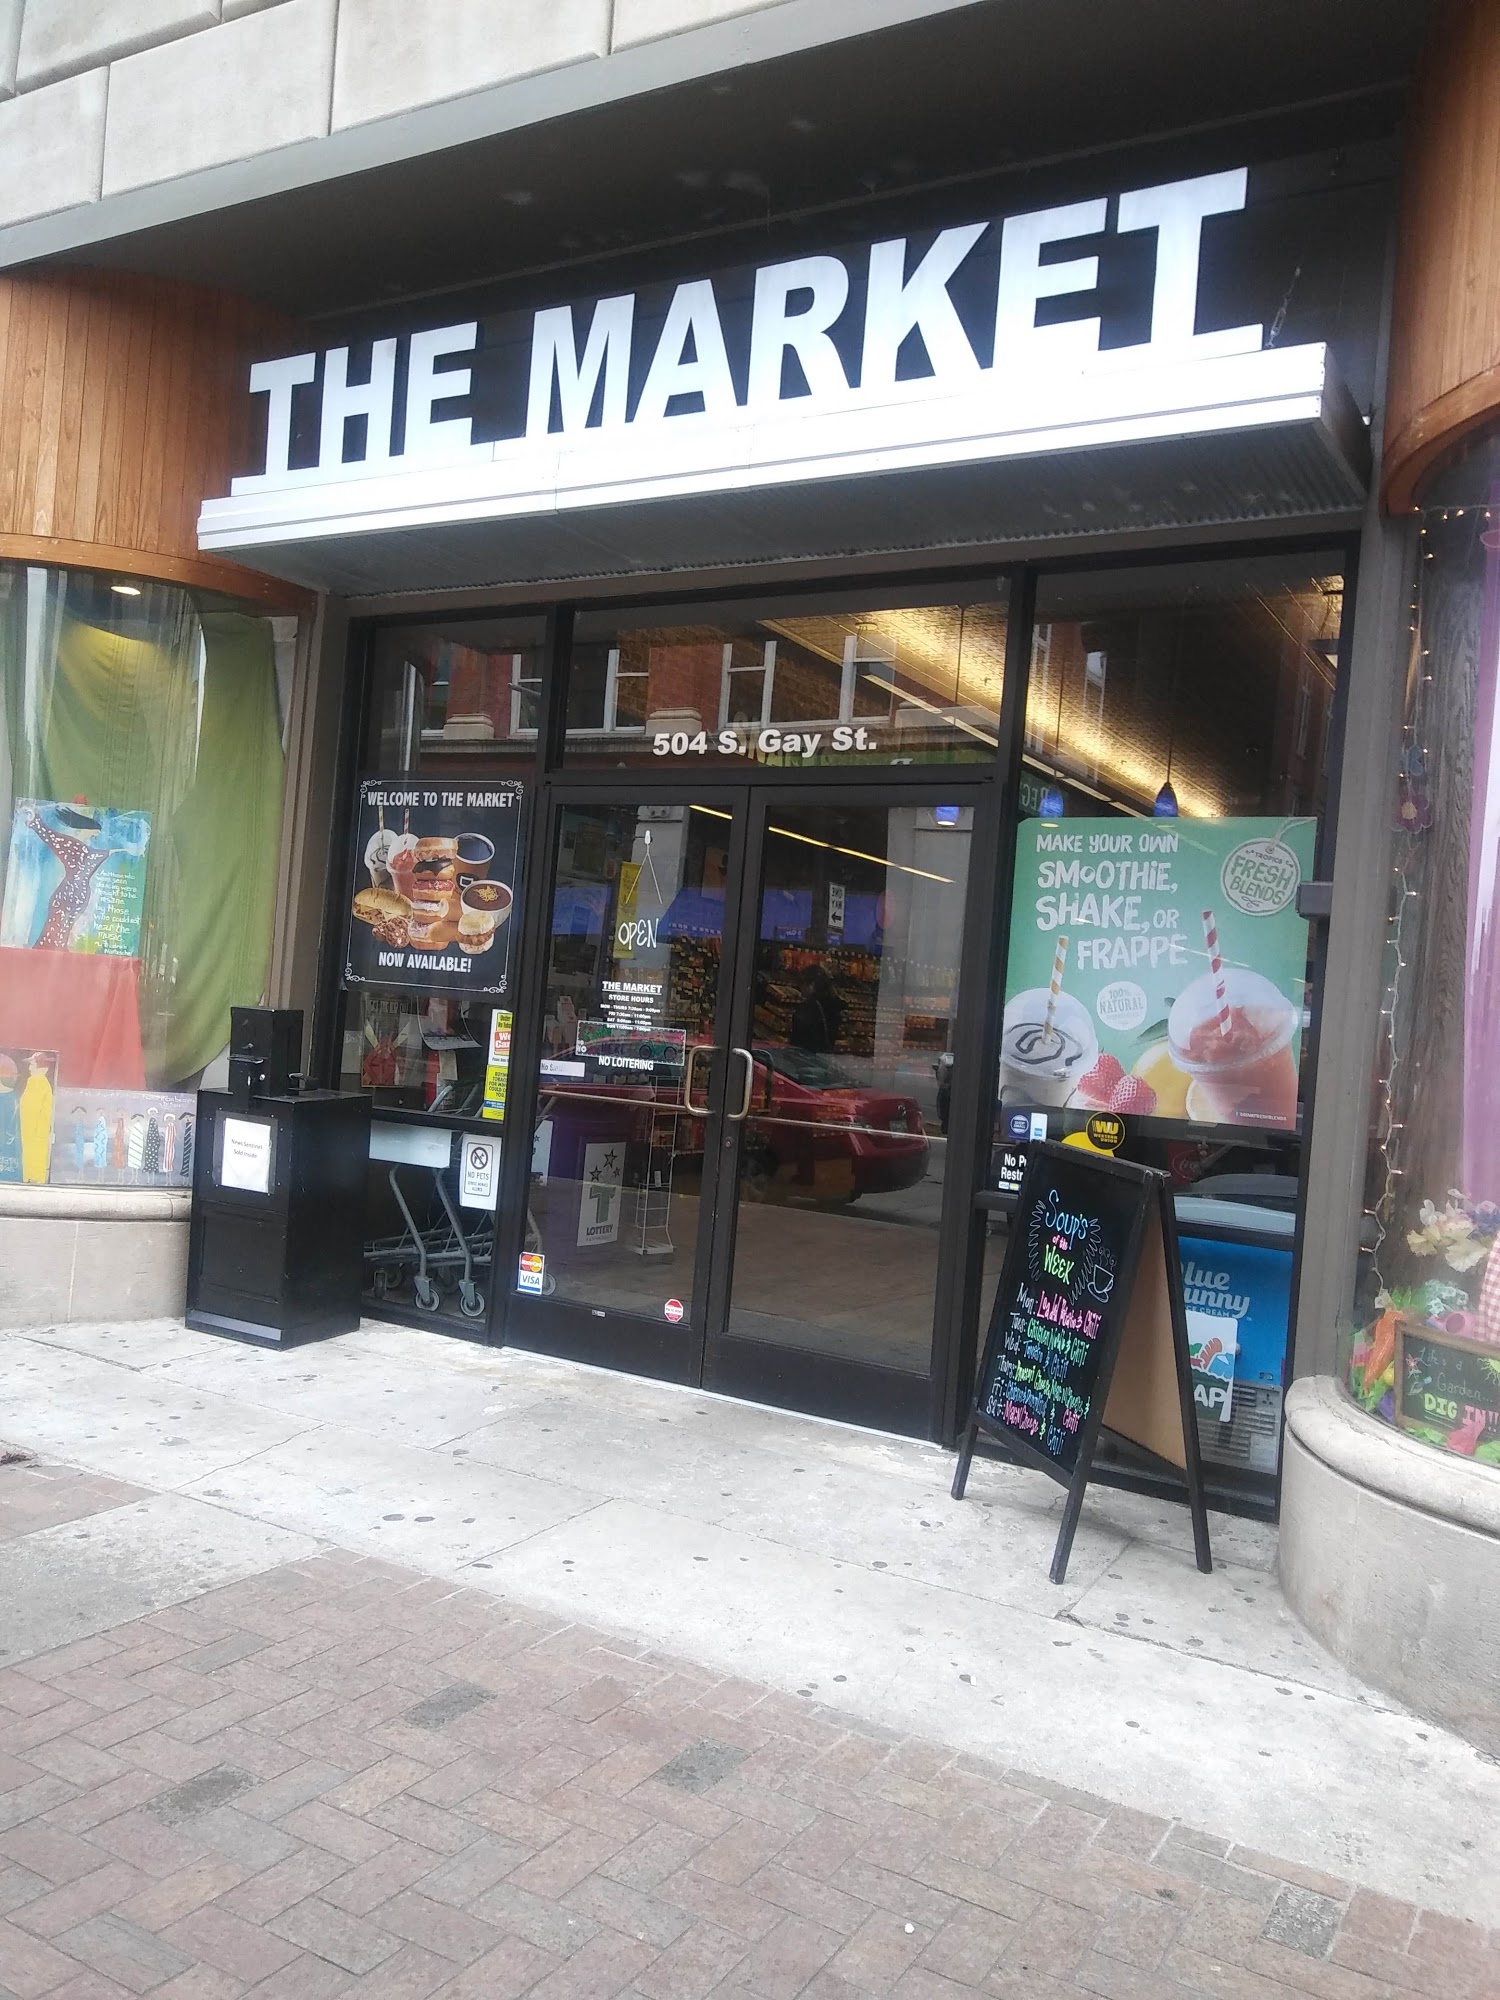 The Local Market